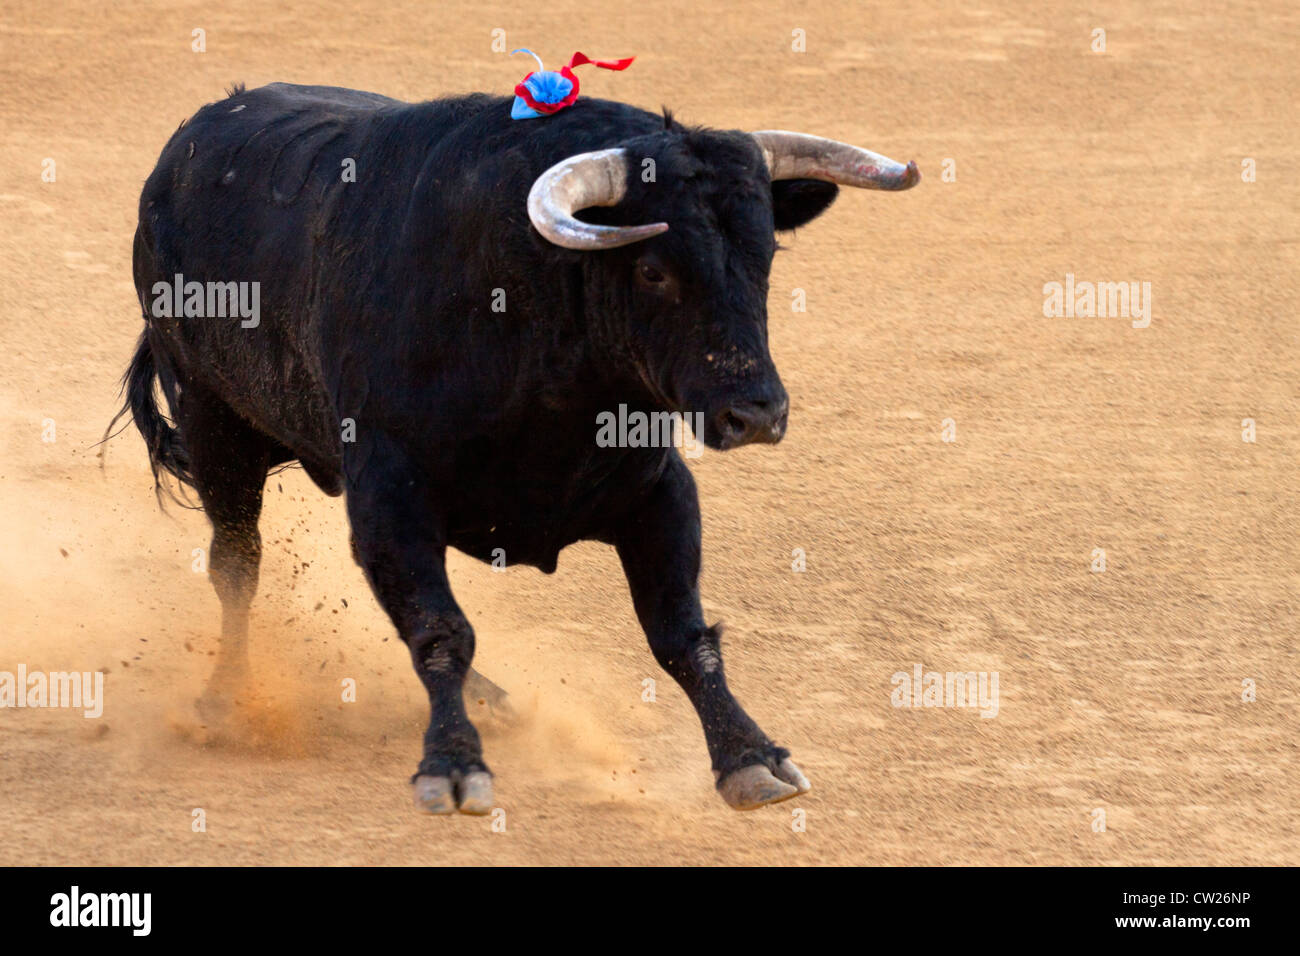 Bullfighting in Spain. 21 July 2012, La Linea de la Concepcion, Spain. Stock Photo